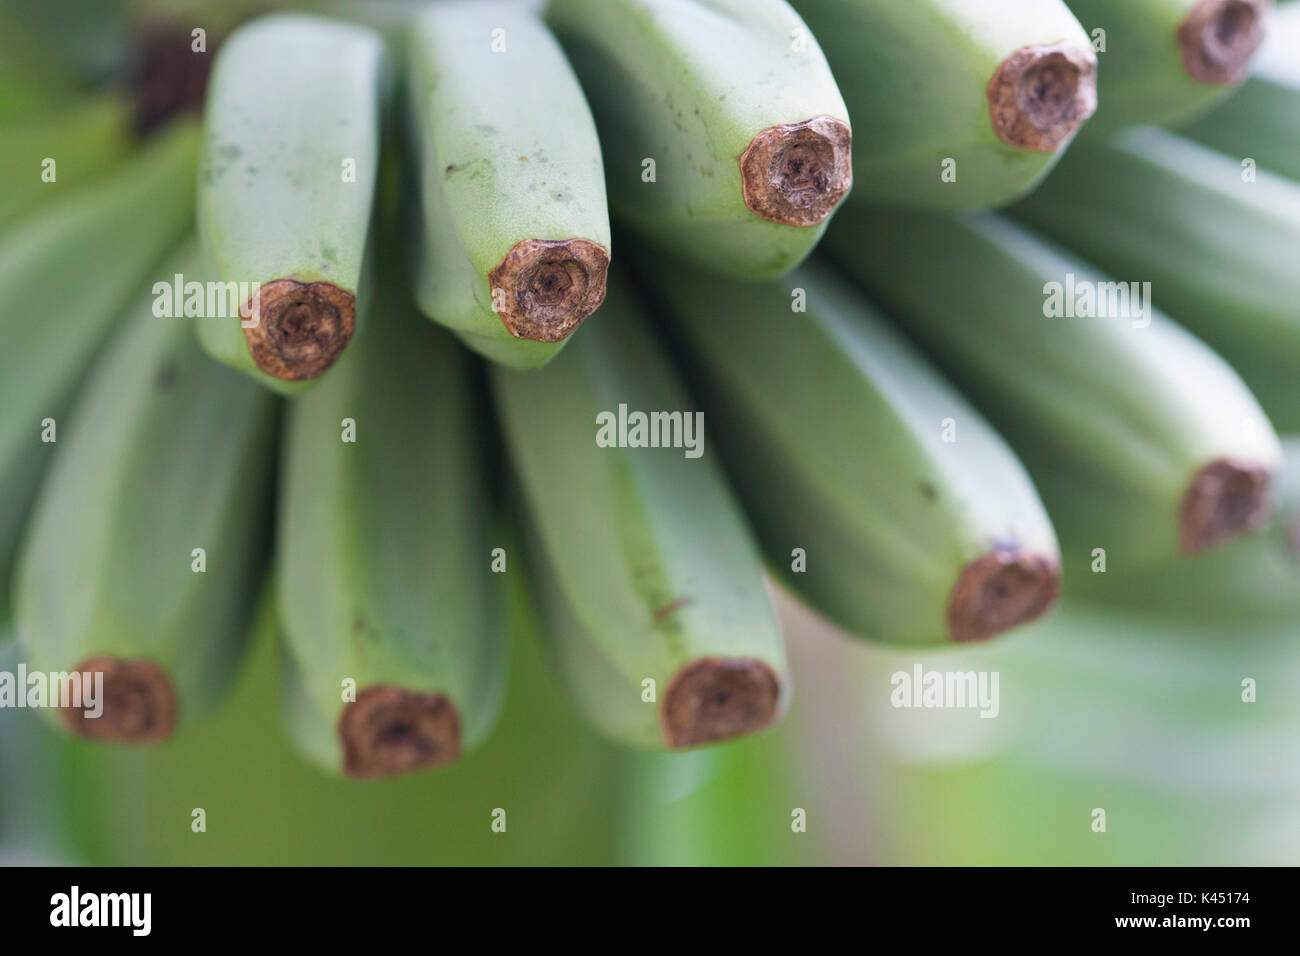 bananas growing Stock Photo